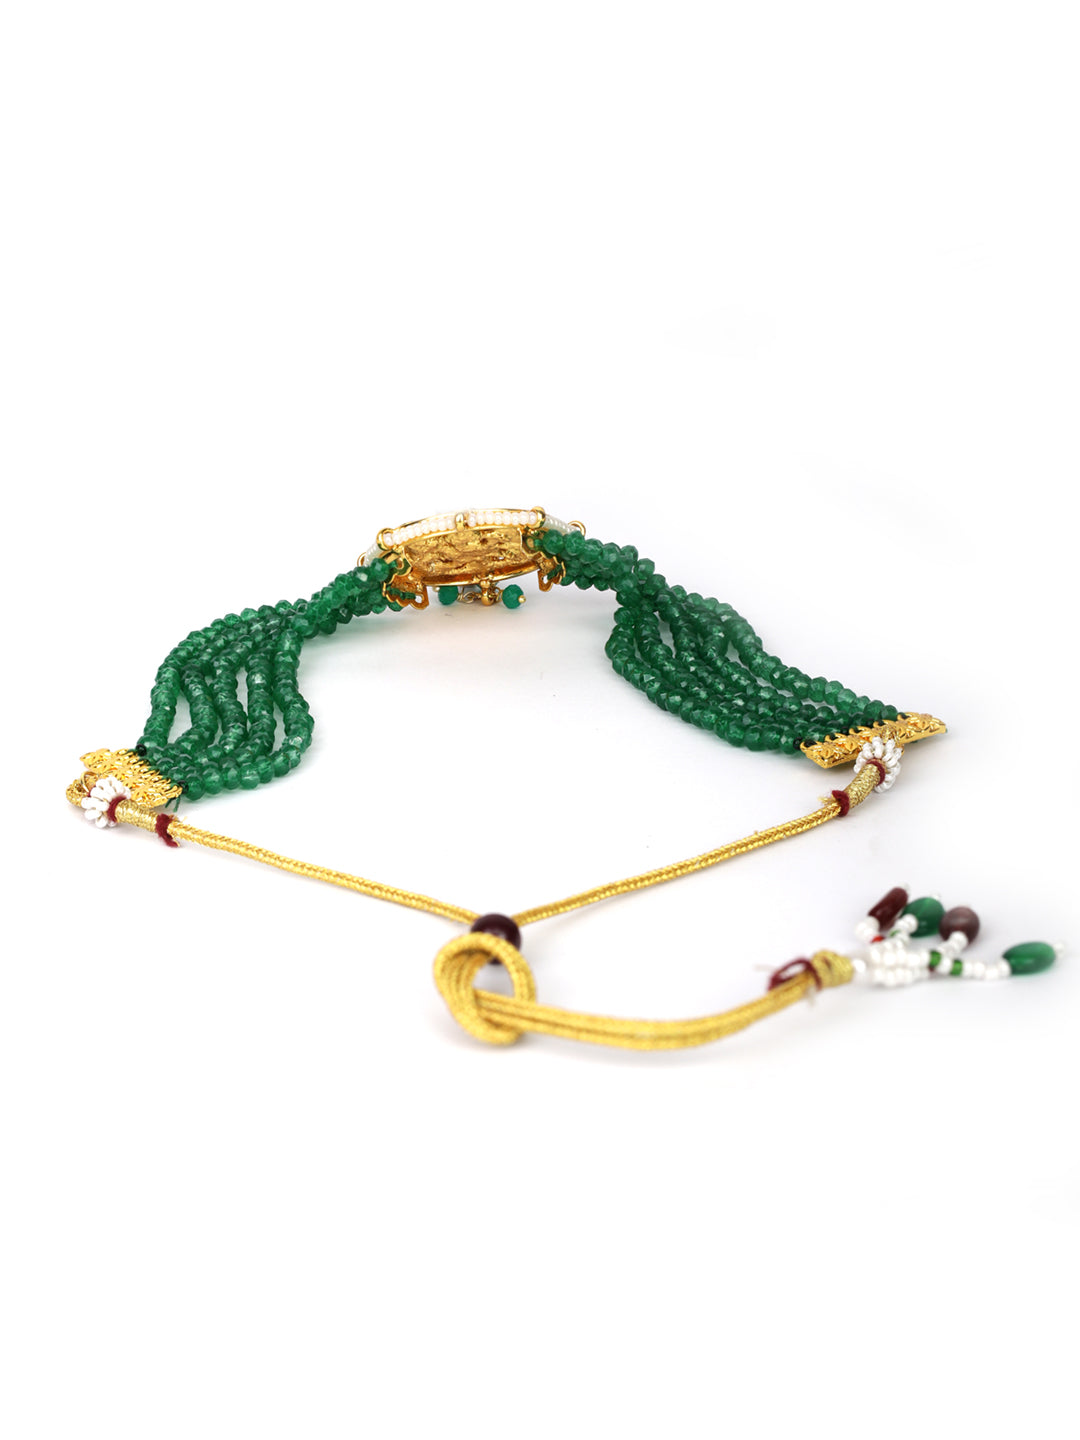 Green Beads Kundan Gold Plated Traditional Choker